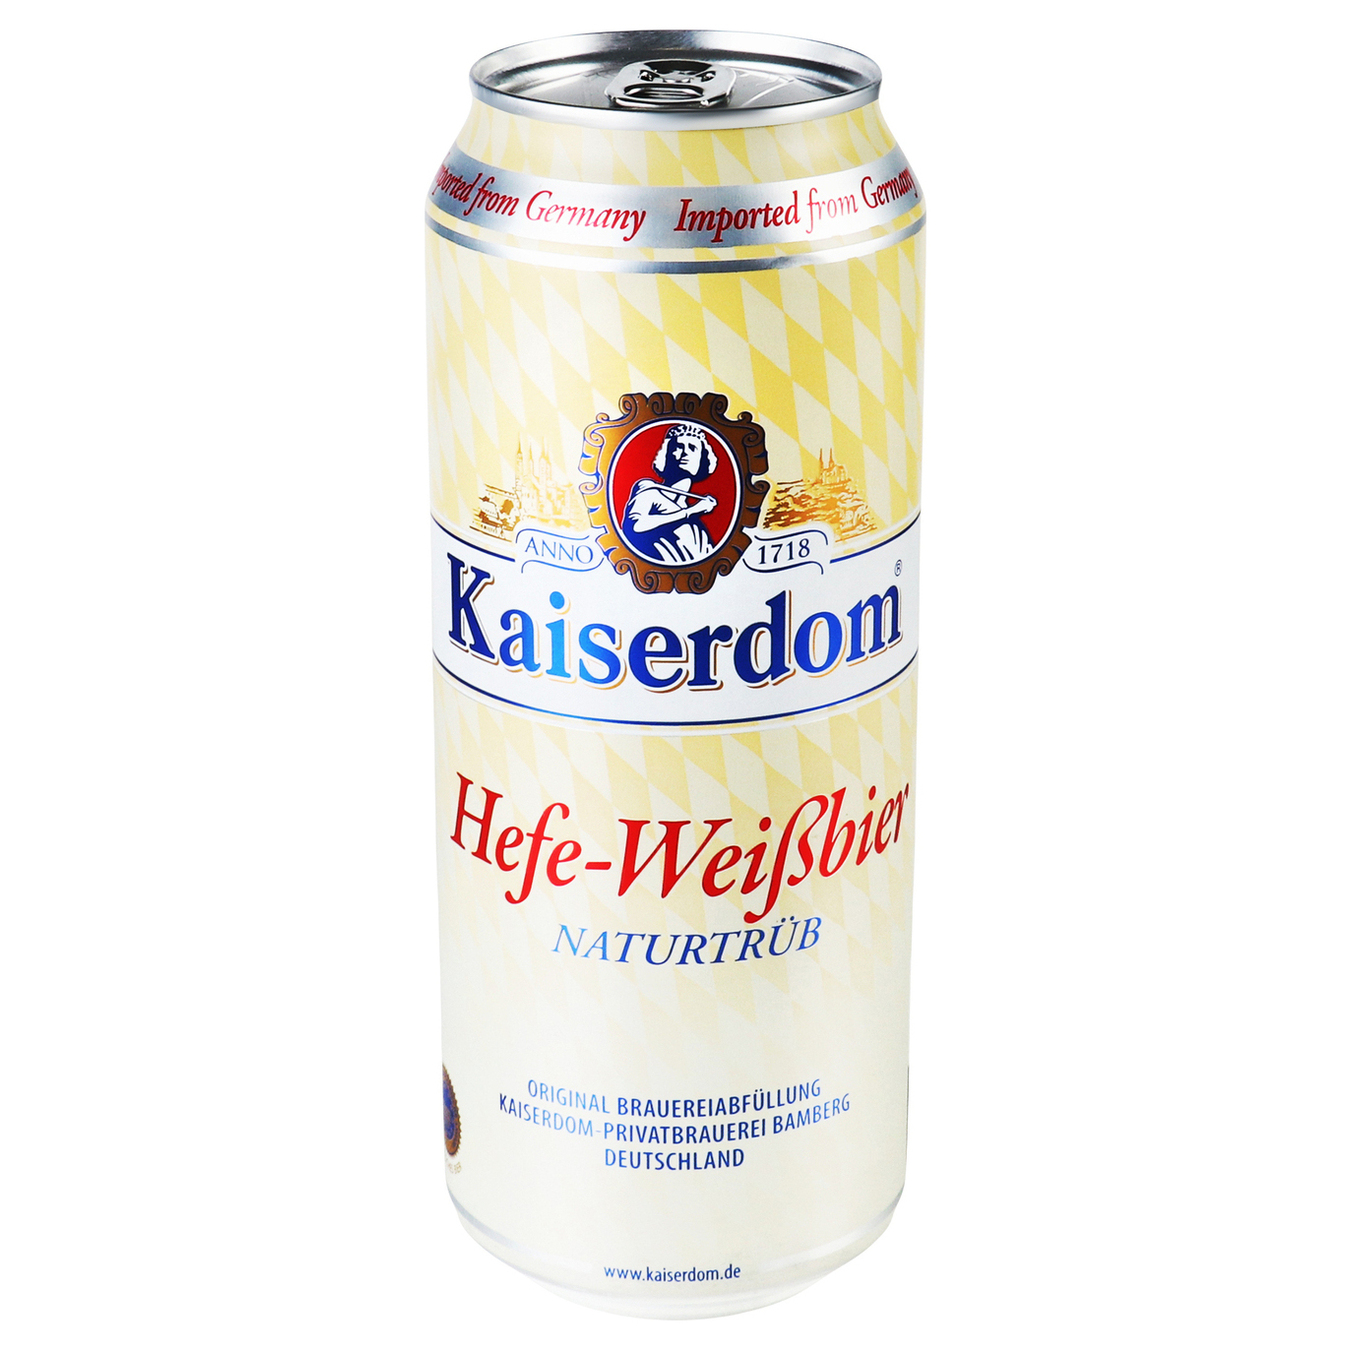 Kaiserdom Hefe-Weisbier unfiltered light beer 4,7% 0,5l 2